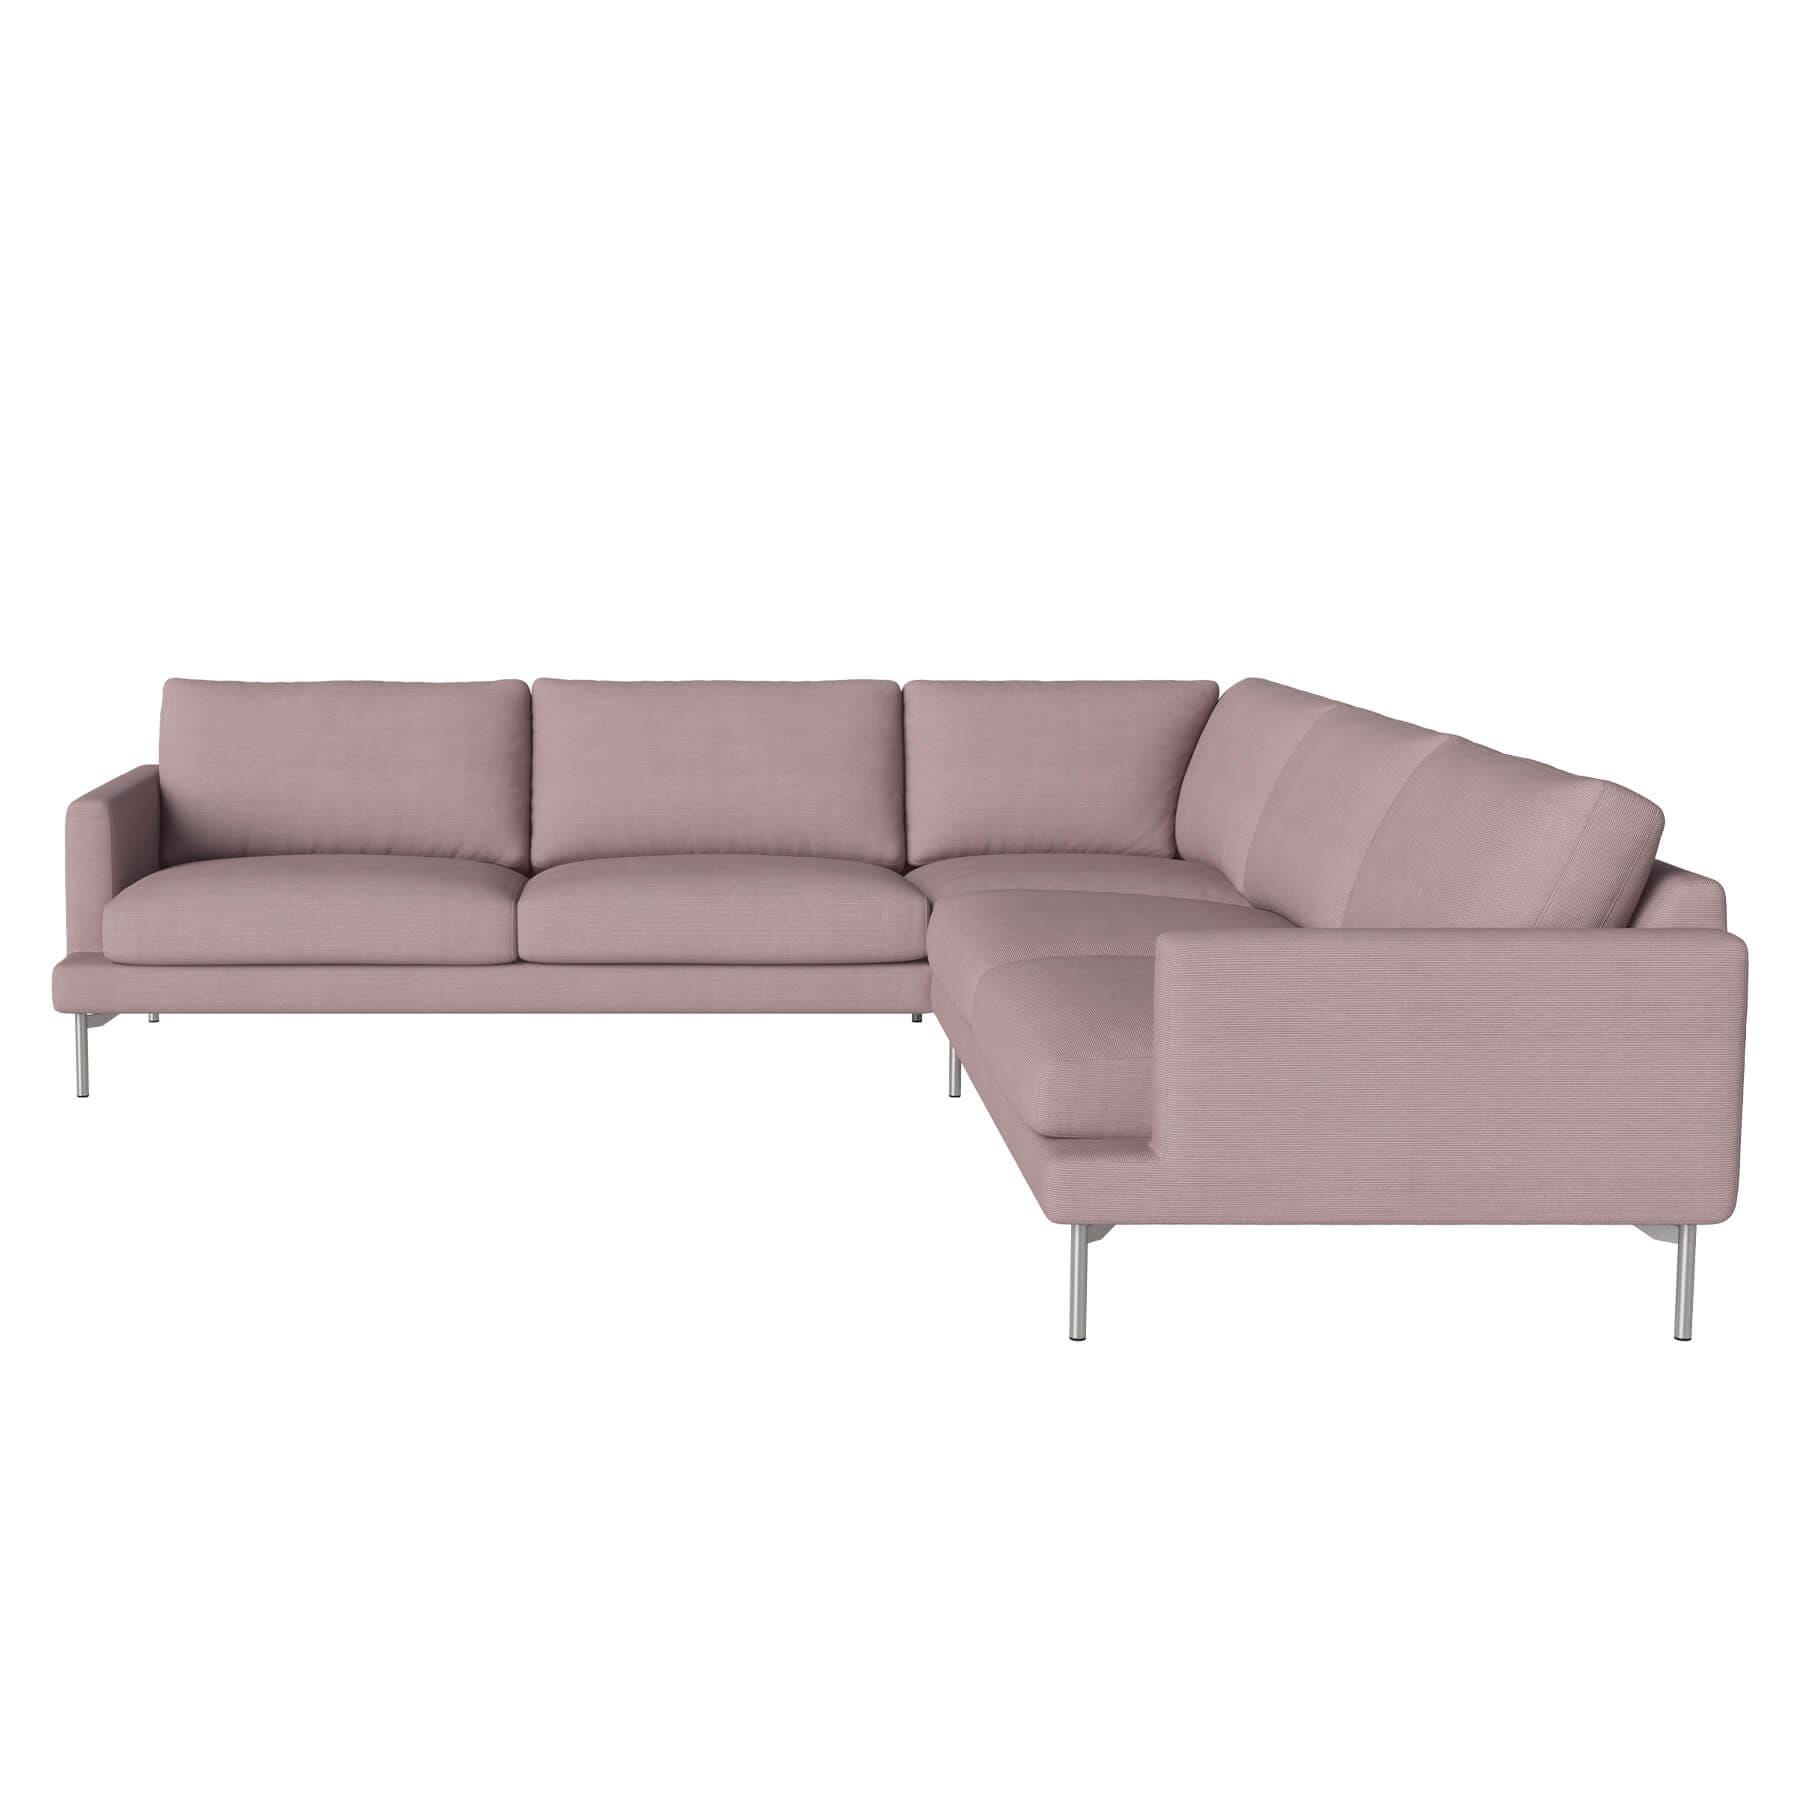 Bolia Veneda Sofa 6 Seater Sofa Corner Sofa Brushed Steel Linea Rosa Pink Designer Furniture From Holloways Of Ludlow